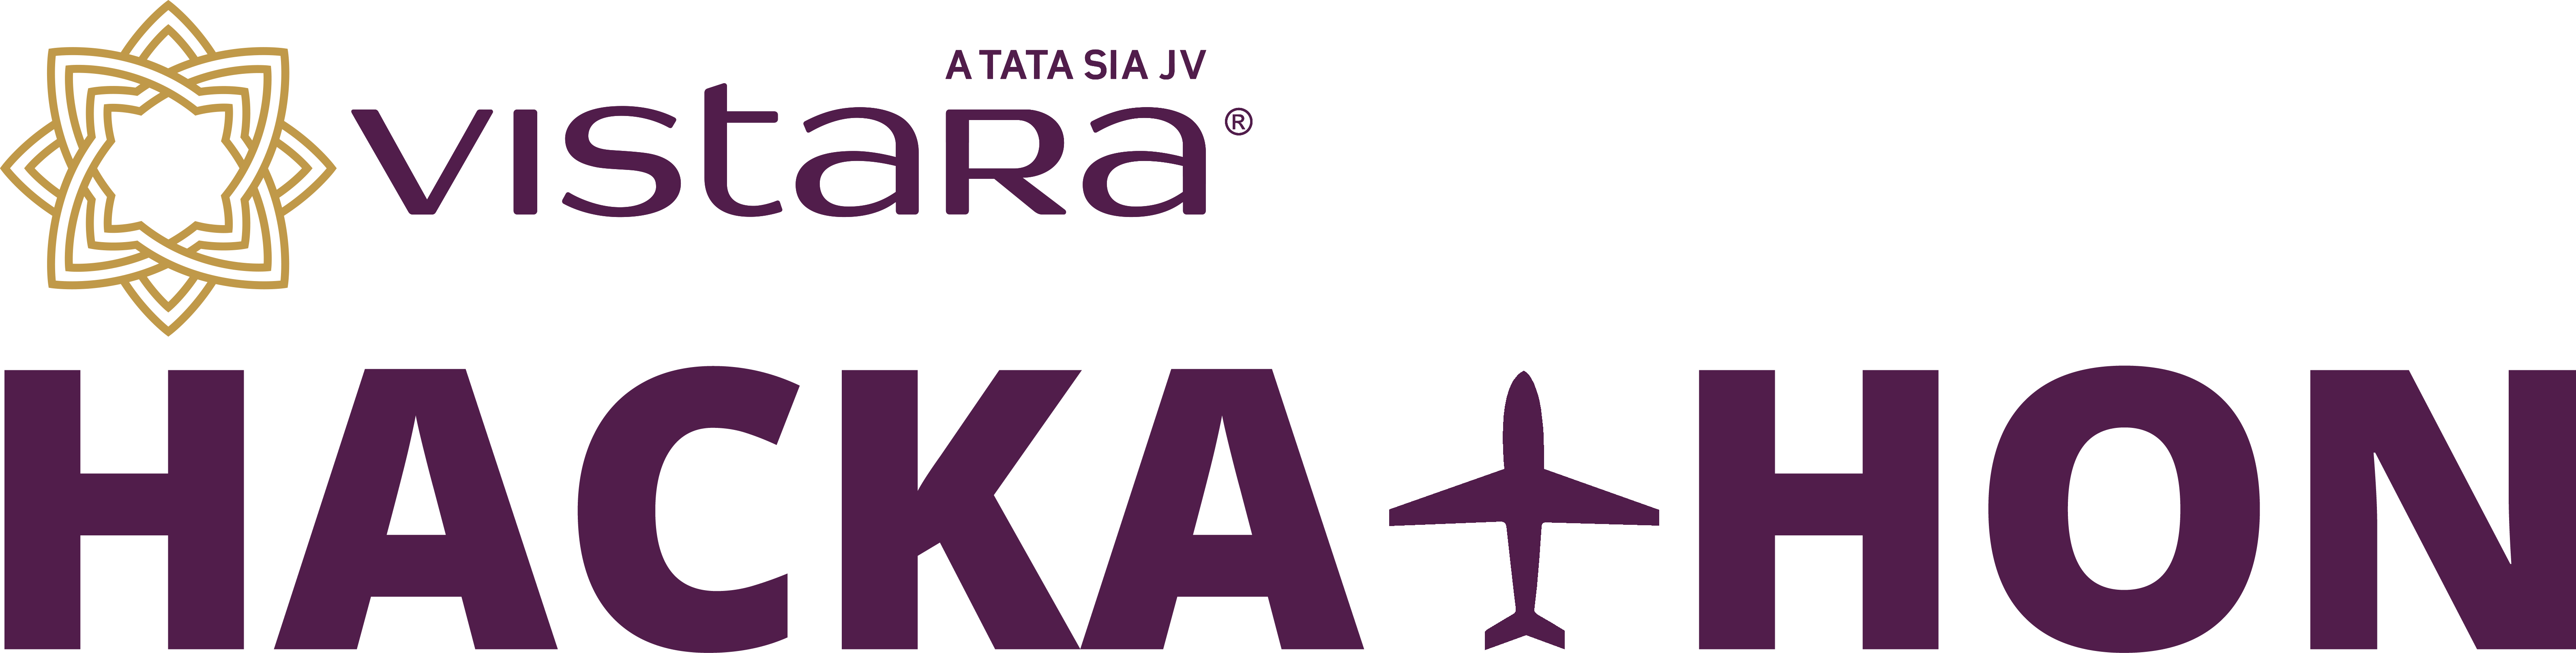 Vistara Logo - Vistara Hackathon Delhi-Aviation Hackathon Bangalore 2017